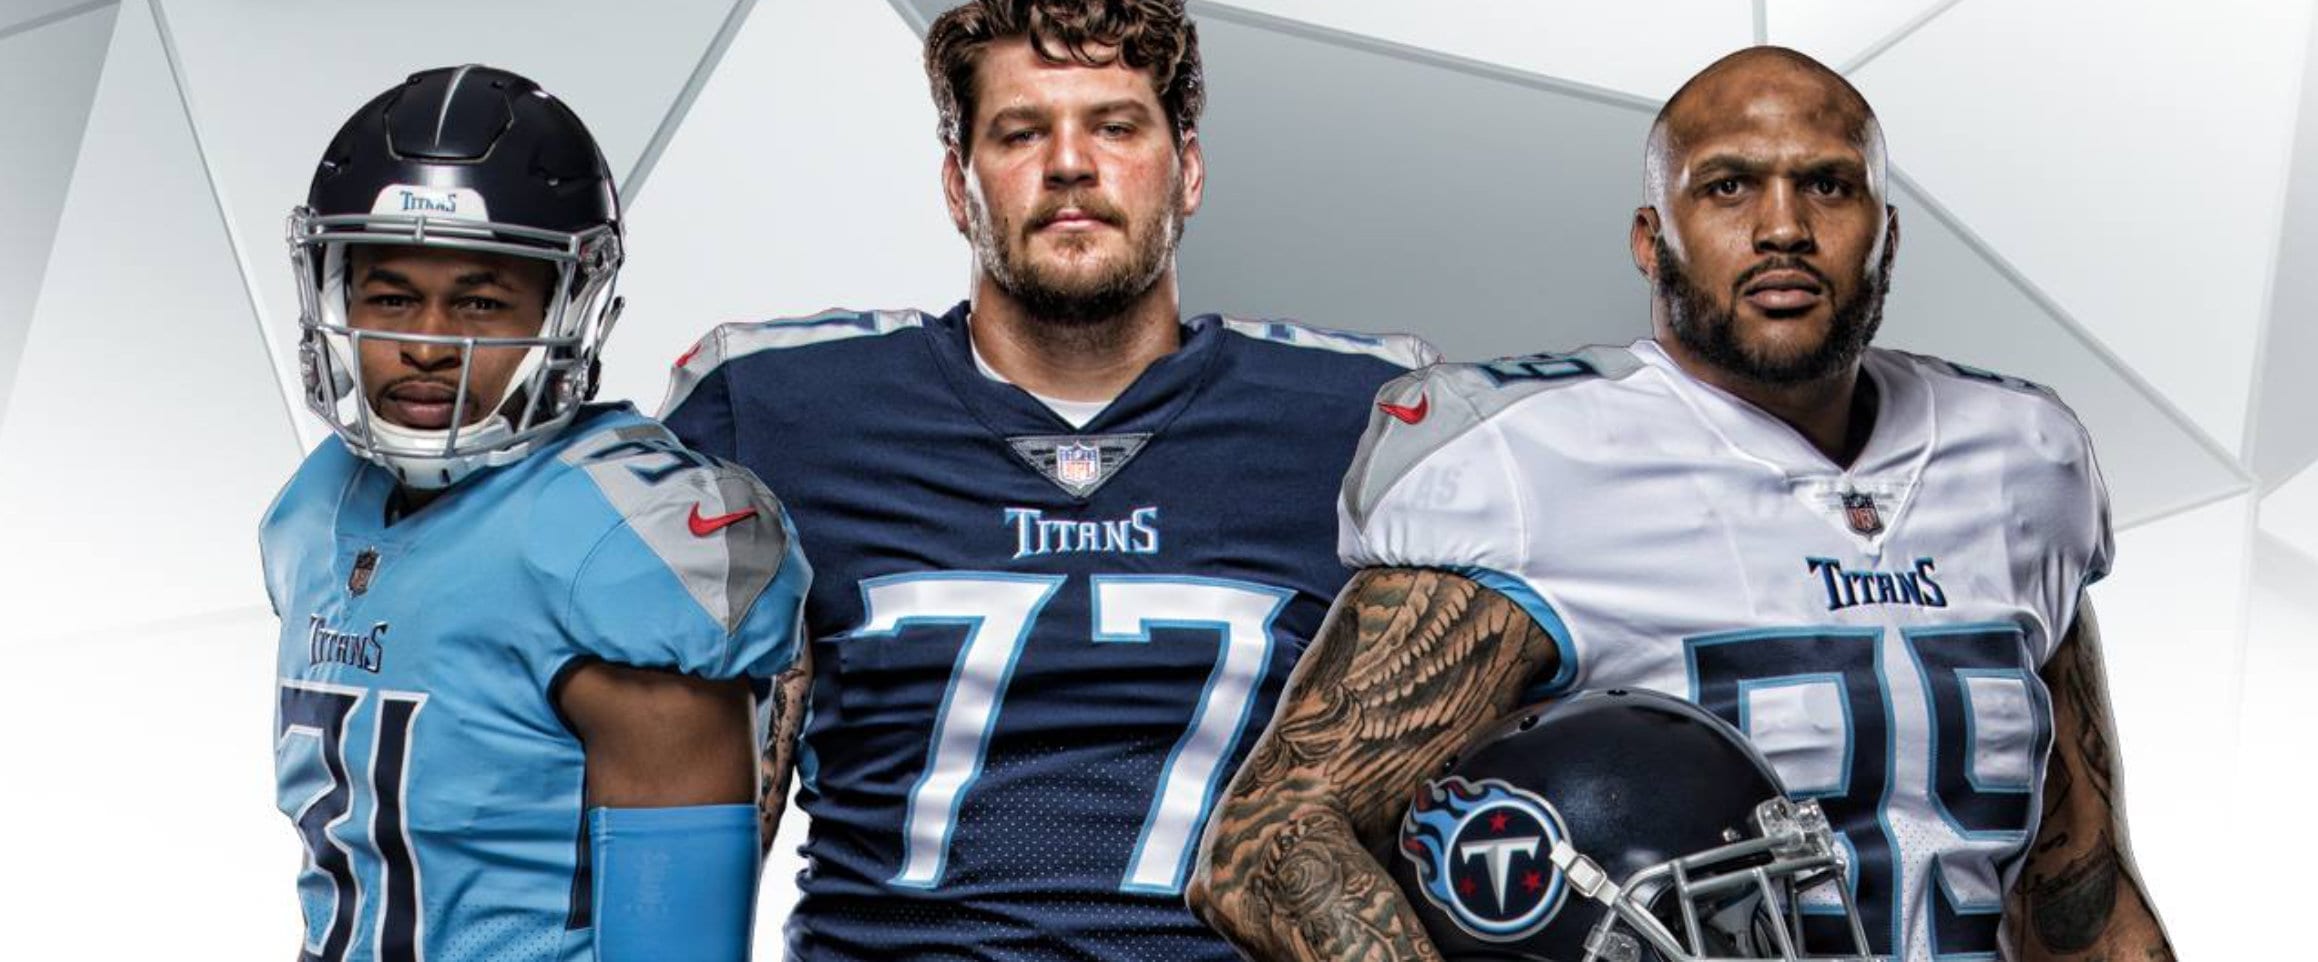 Titans unveil new uniforms ahead of 2018 season